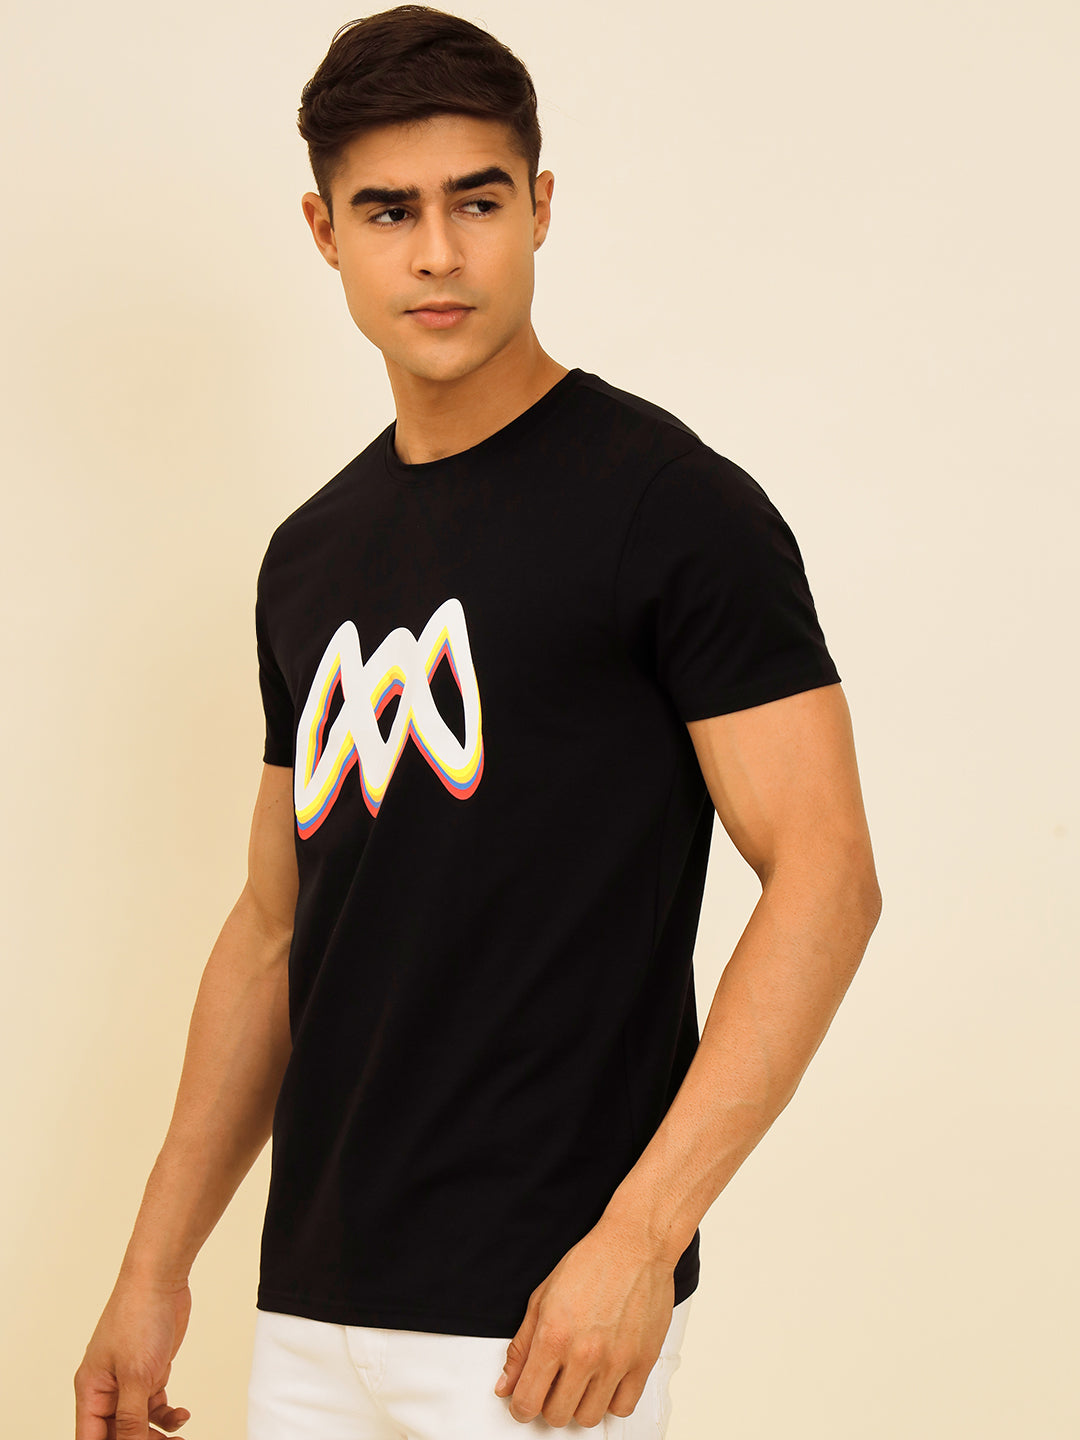 Muwin Black Printed T-shirt